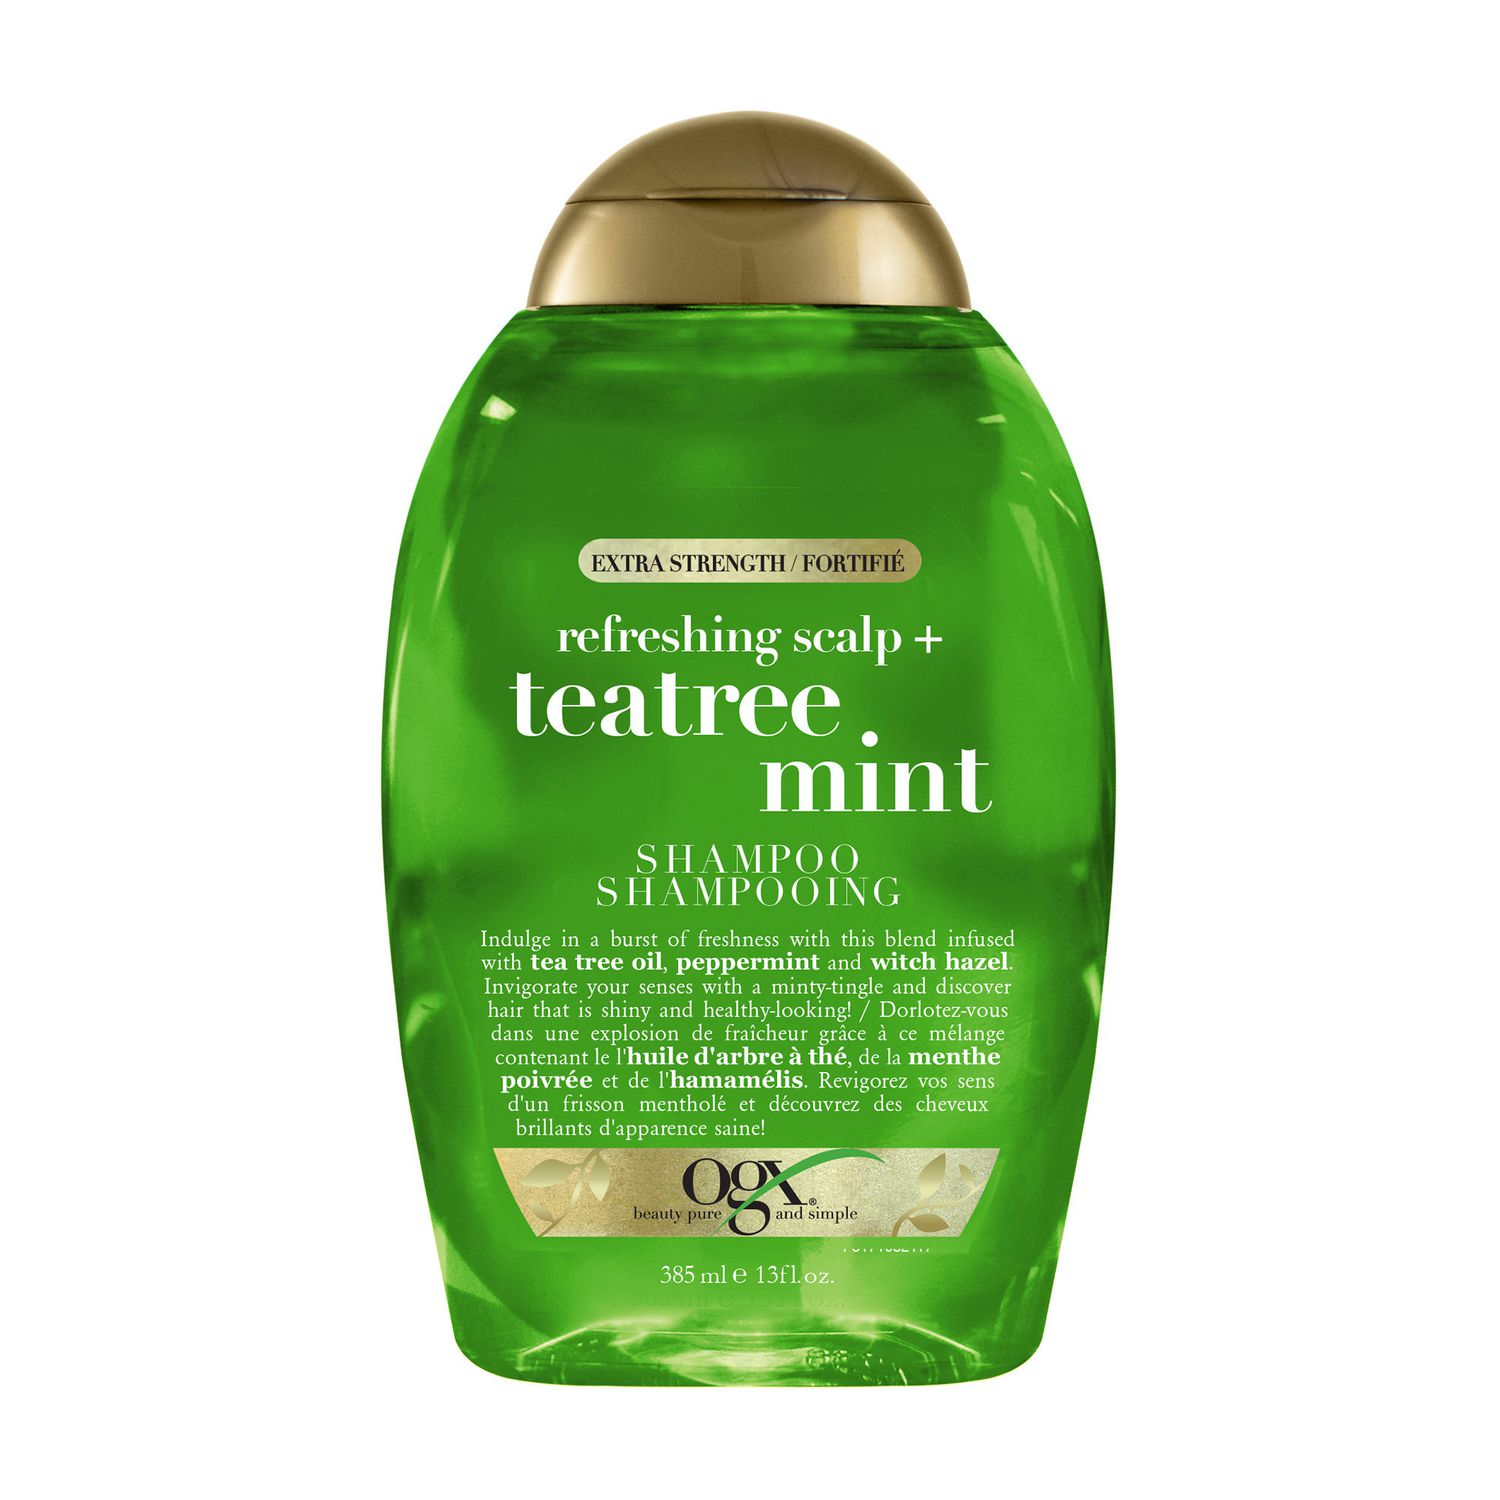 Peppermint shampoo